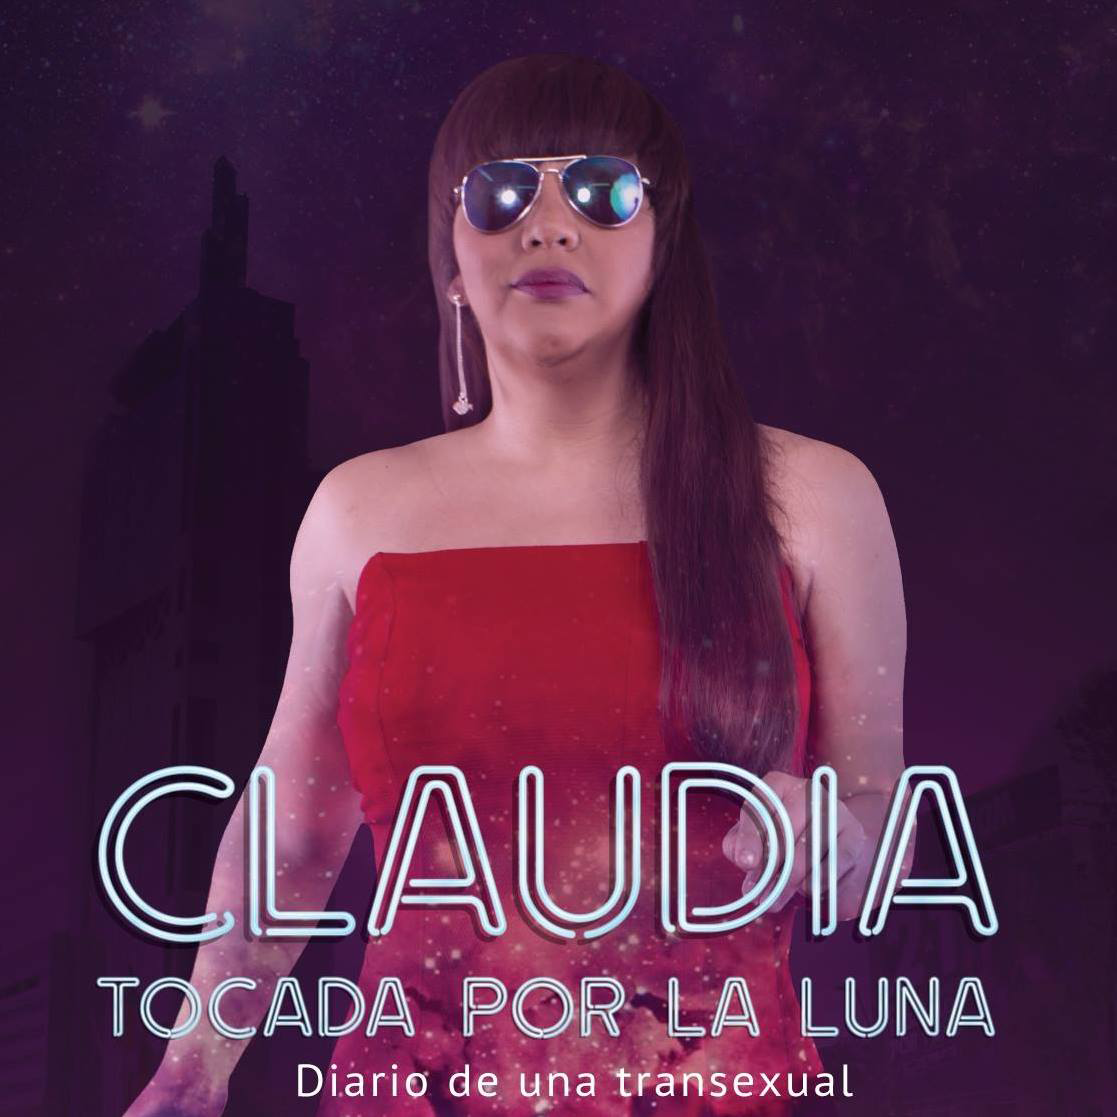 Andalesgai, festival de cine LGTB, cartel promocional del documental Claudia tocada por la luna